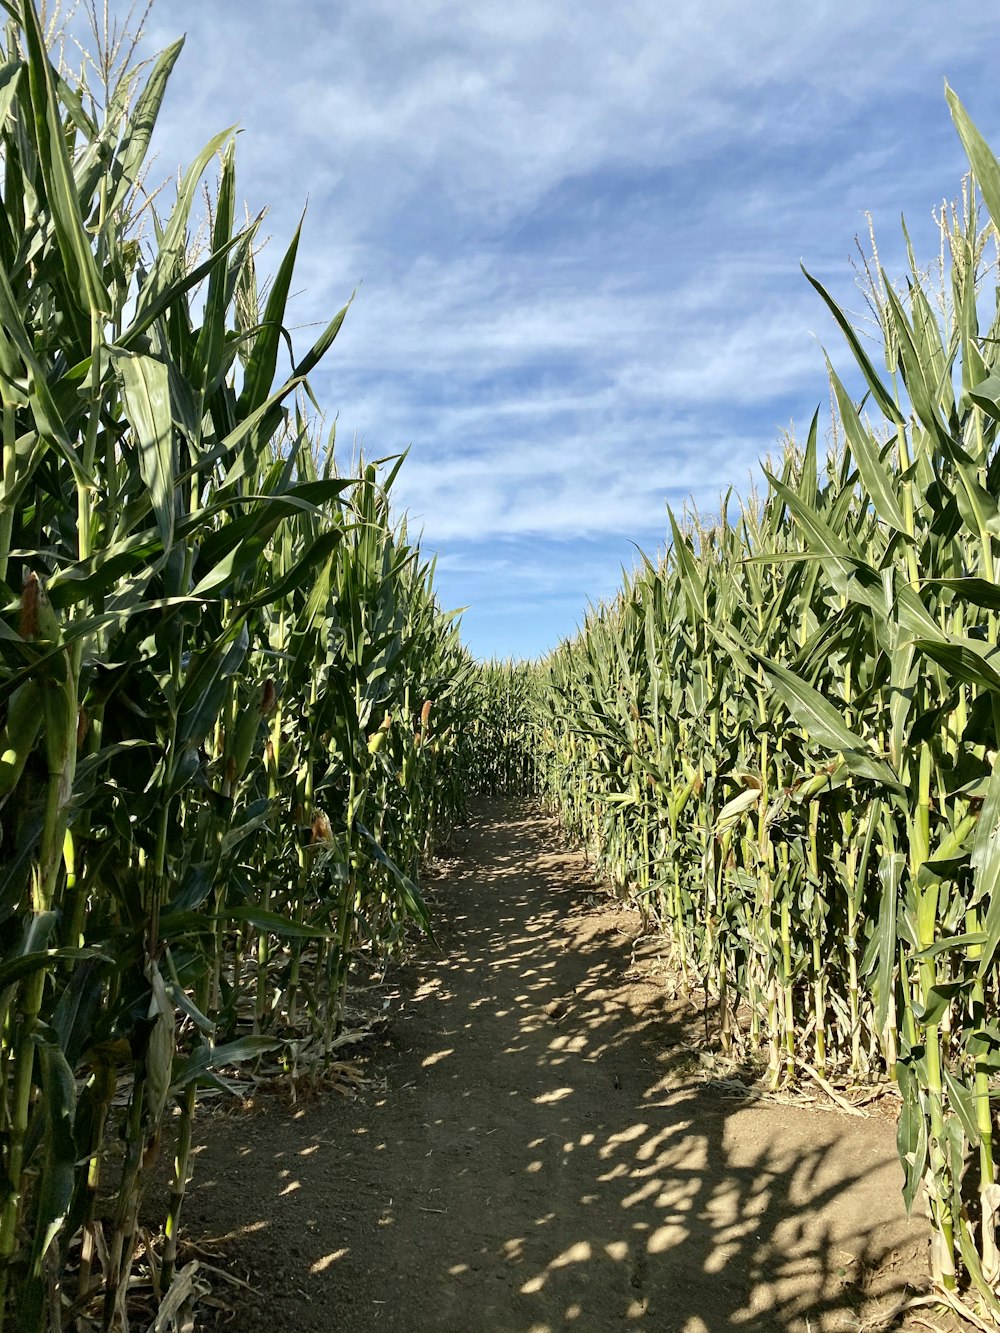 a dirt road between rows of corn stalks